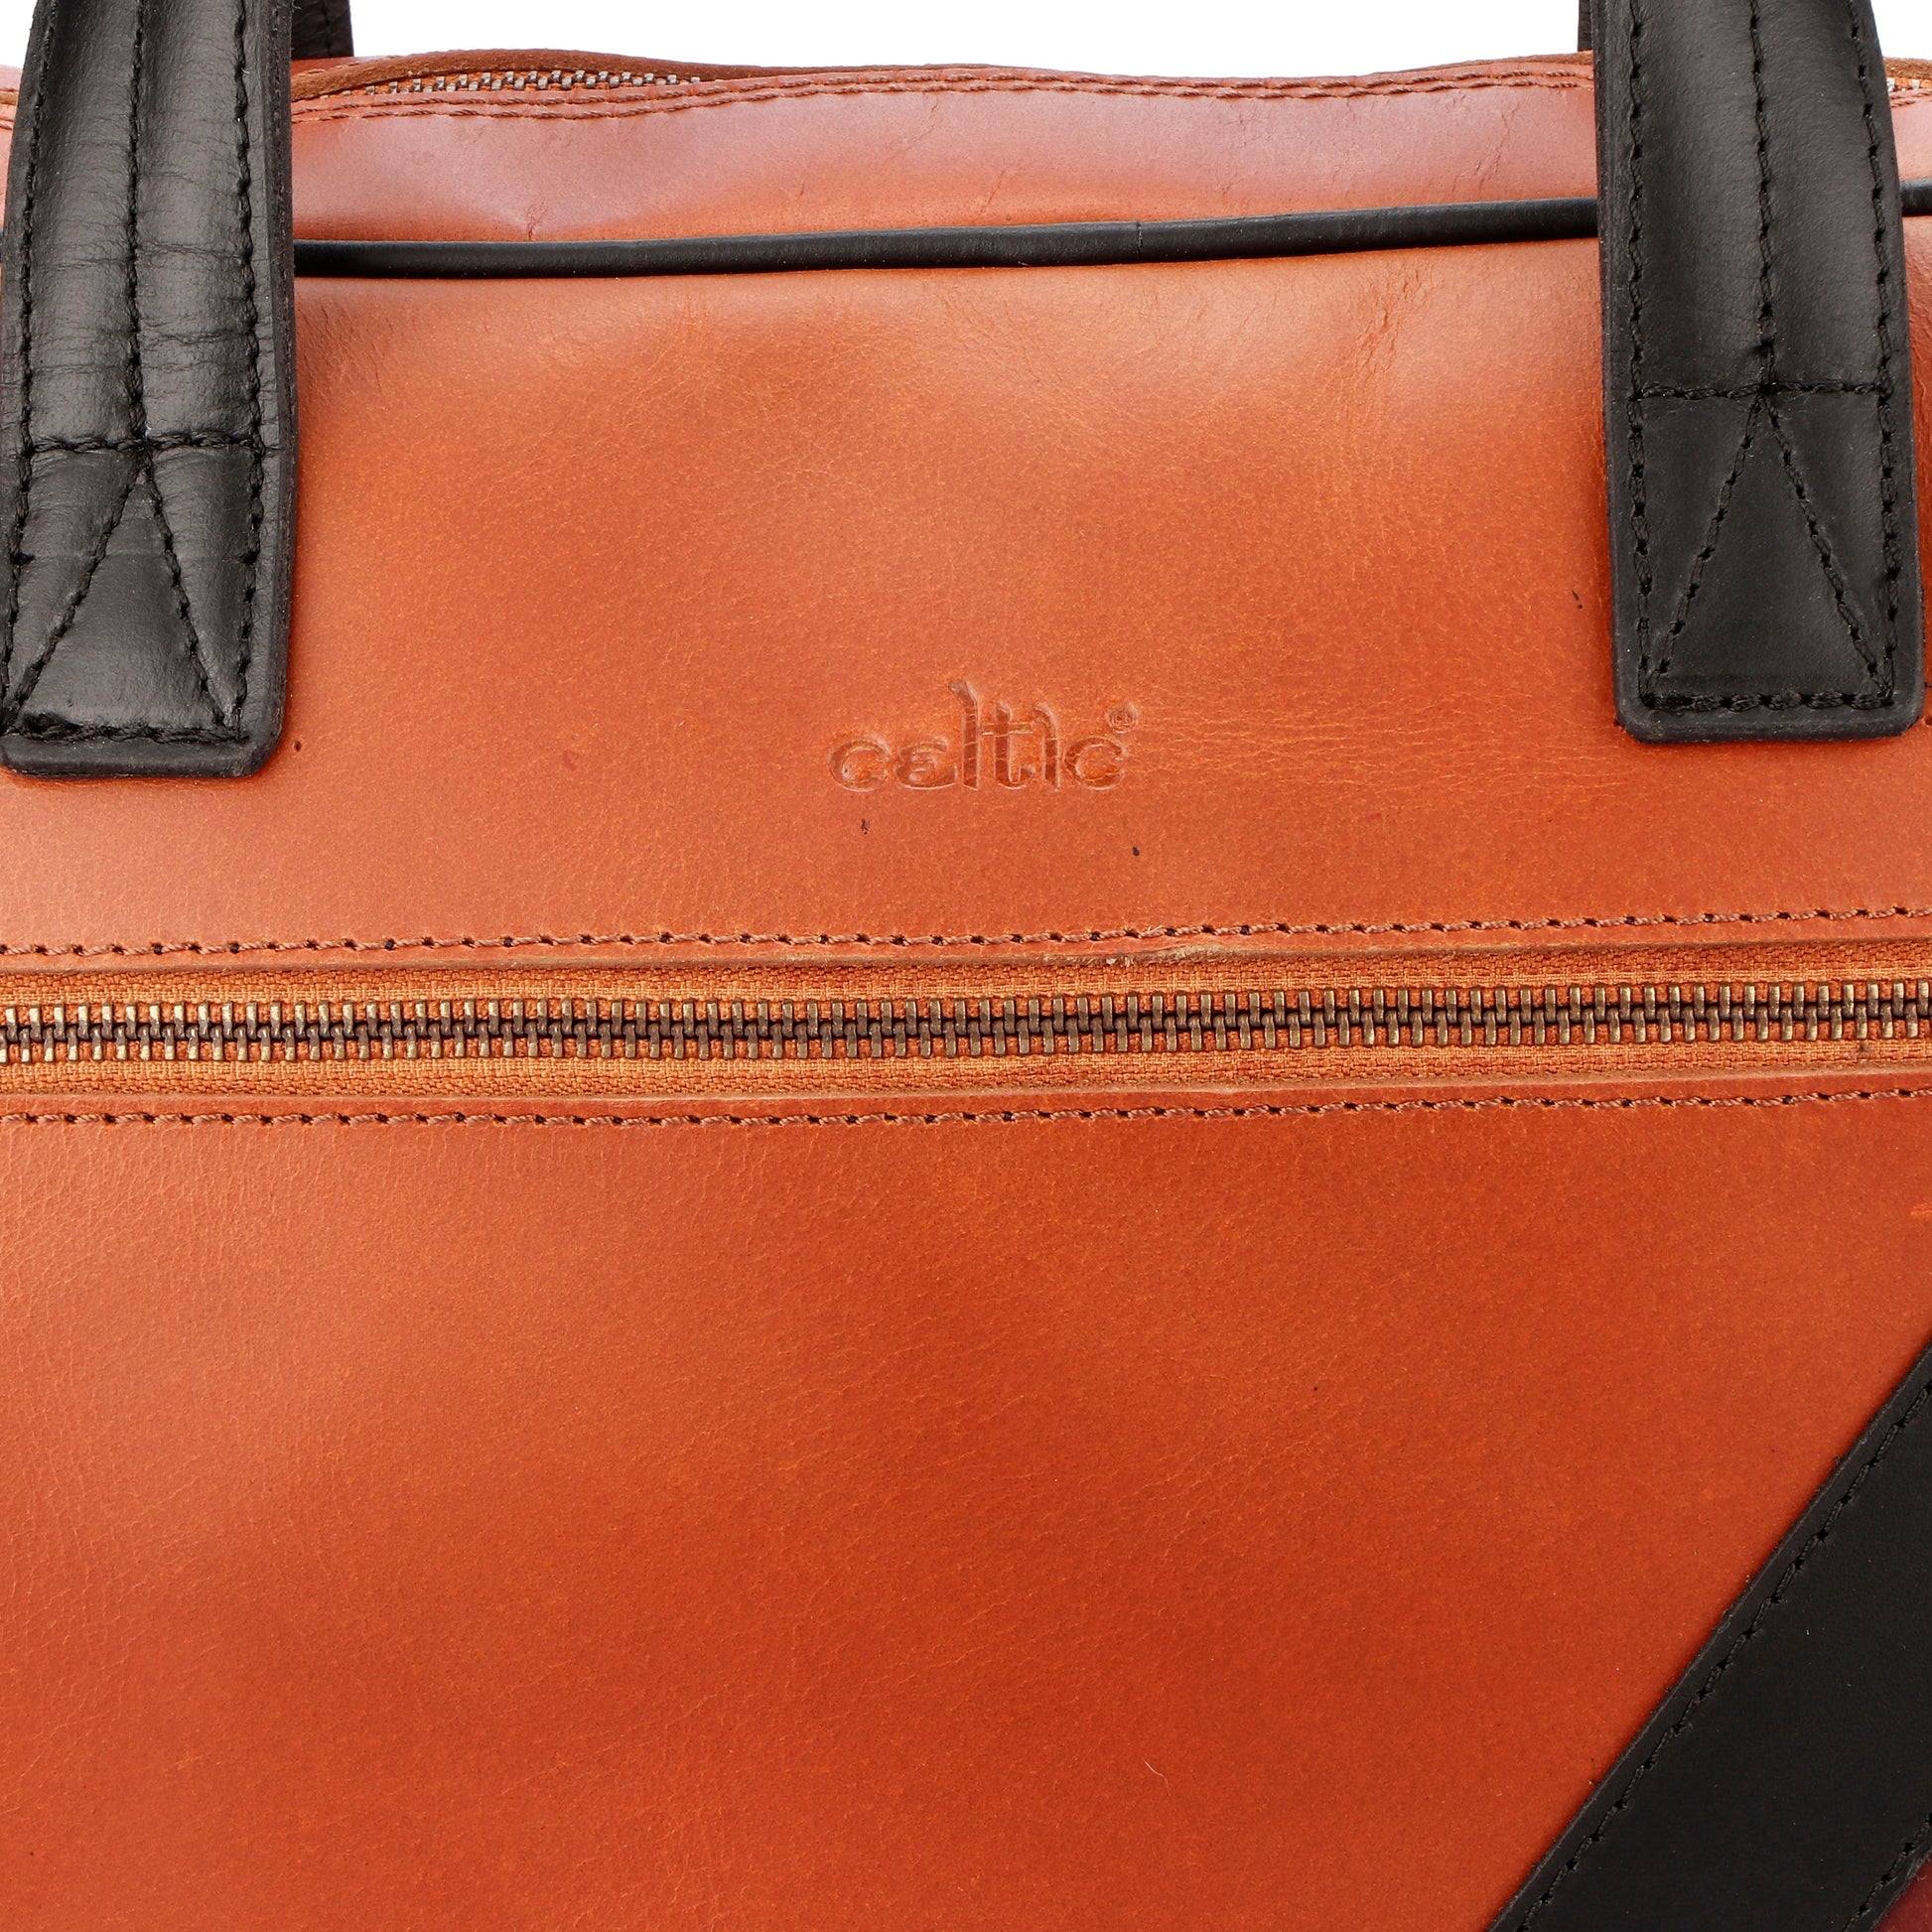 Celtic multicolor premium leather laptop bag for men and women's - CELTICINDIA